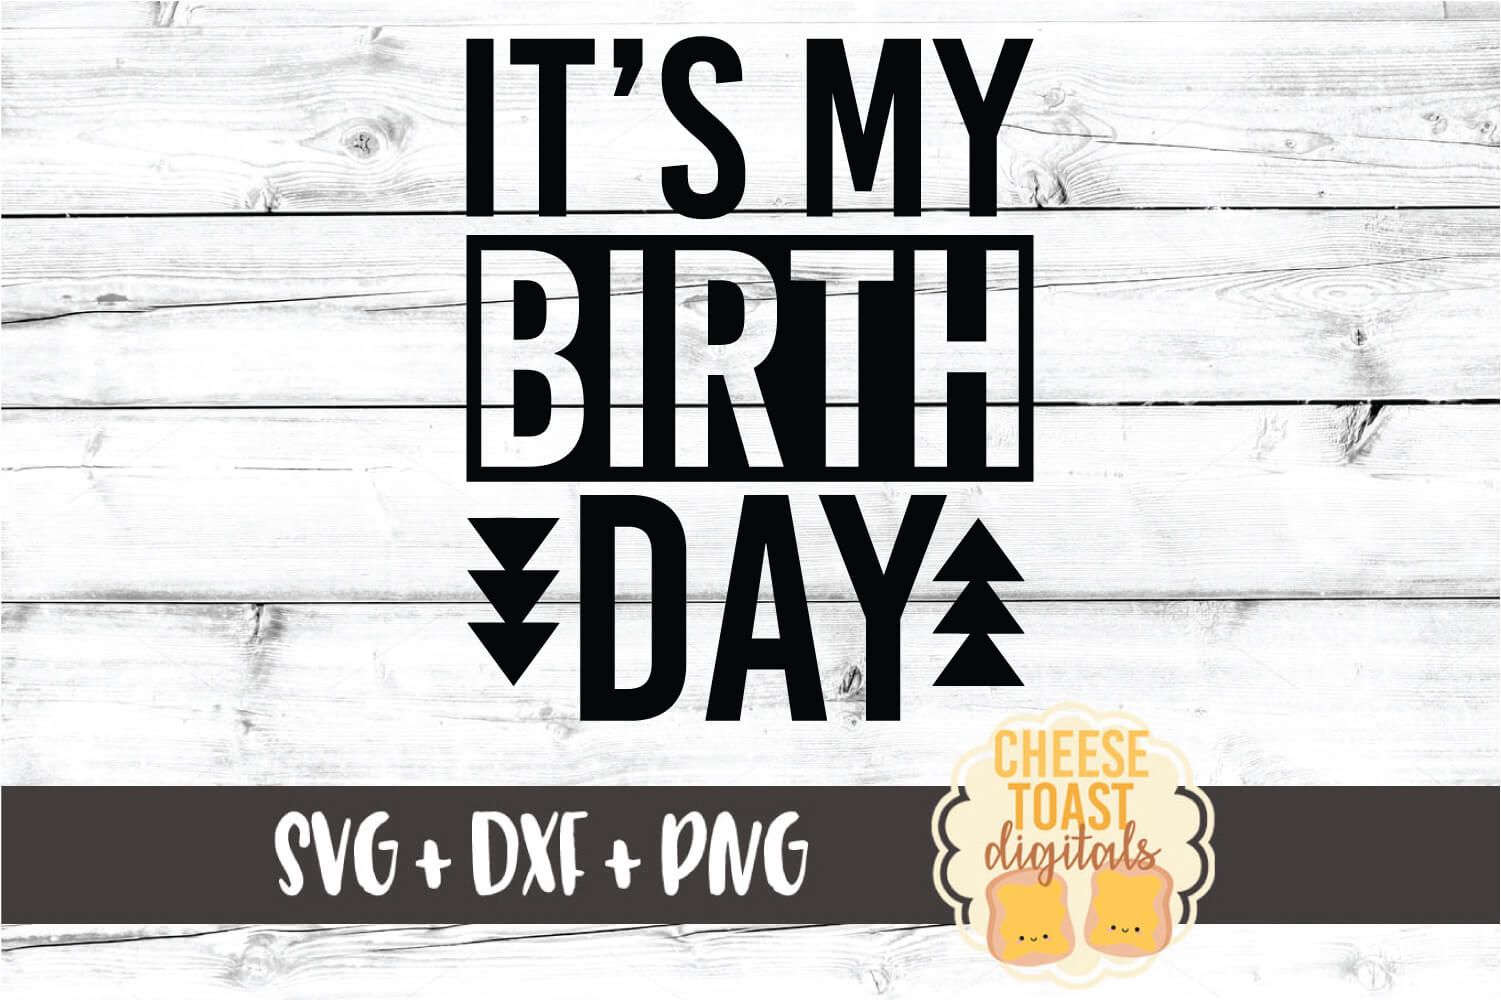 It's My Birthday - Boy Birthday Shirt SVG PNG DXF Cut Files